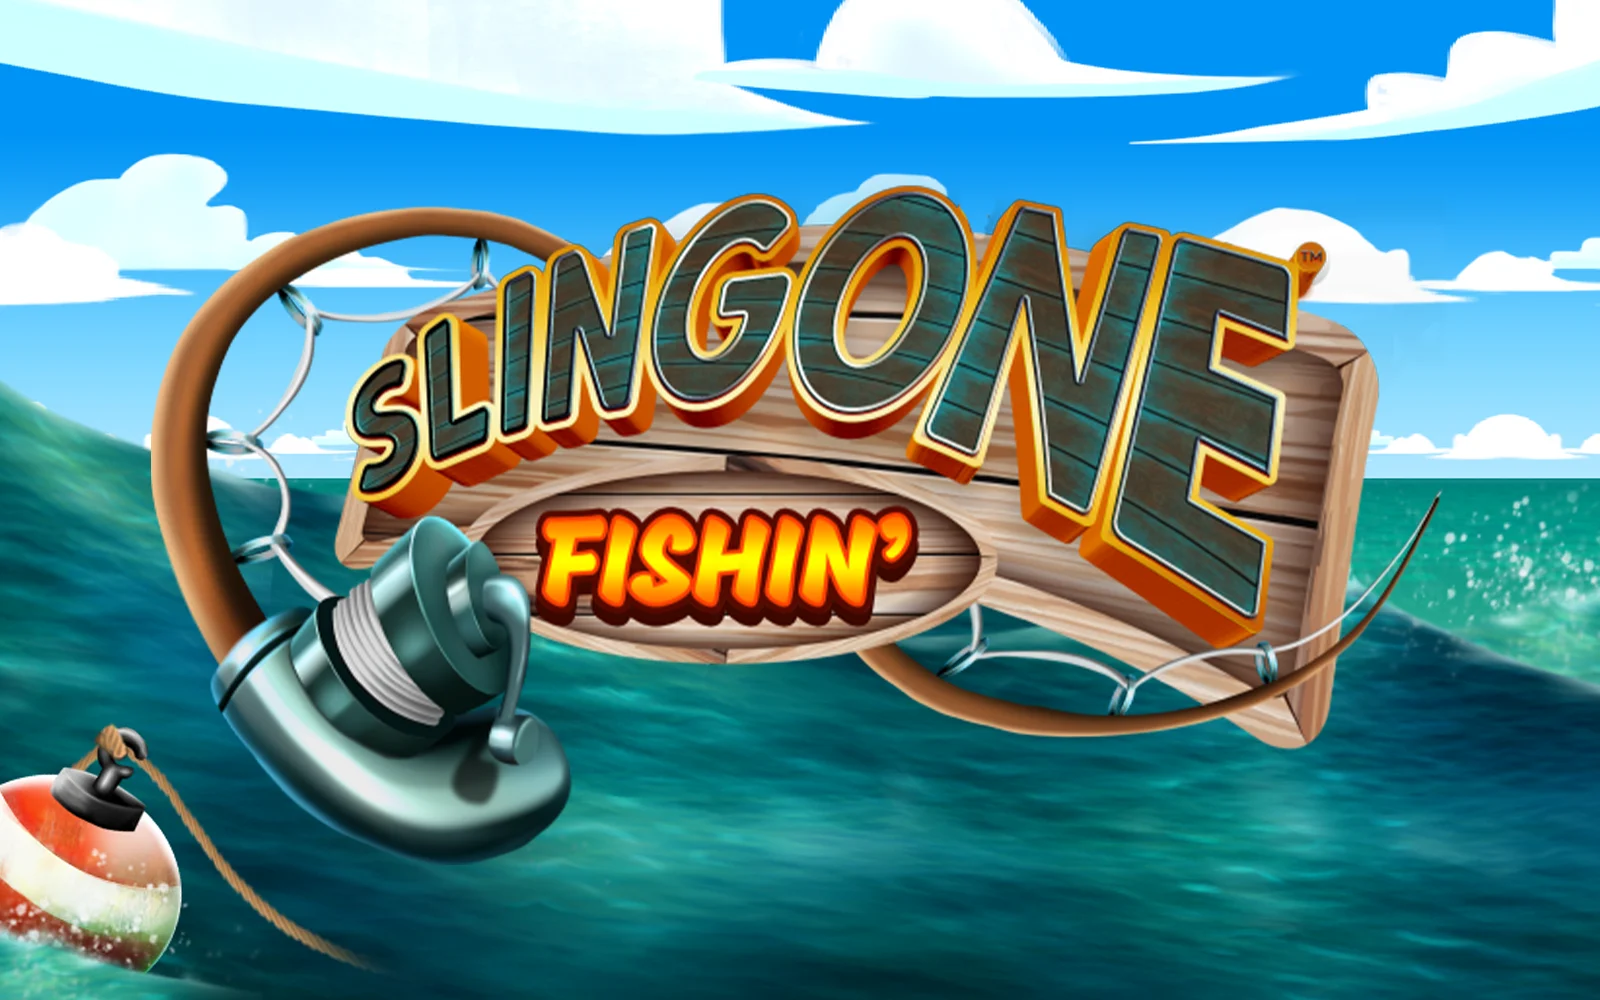 Speel Slingone Fishin op Starcasino.be online casino